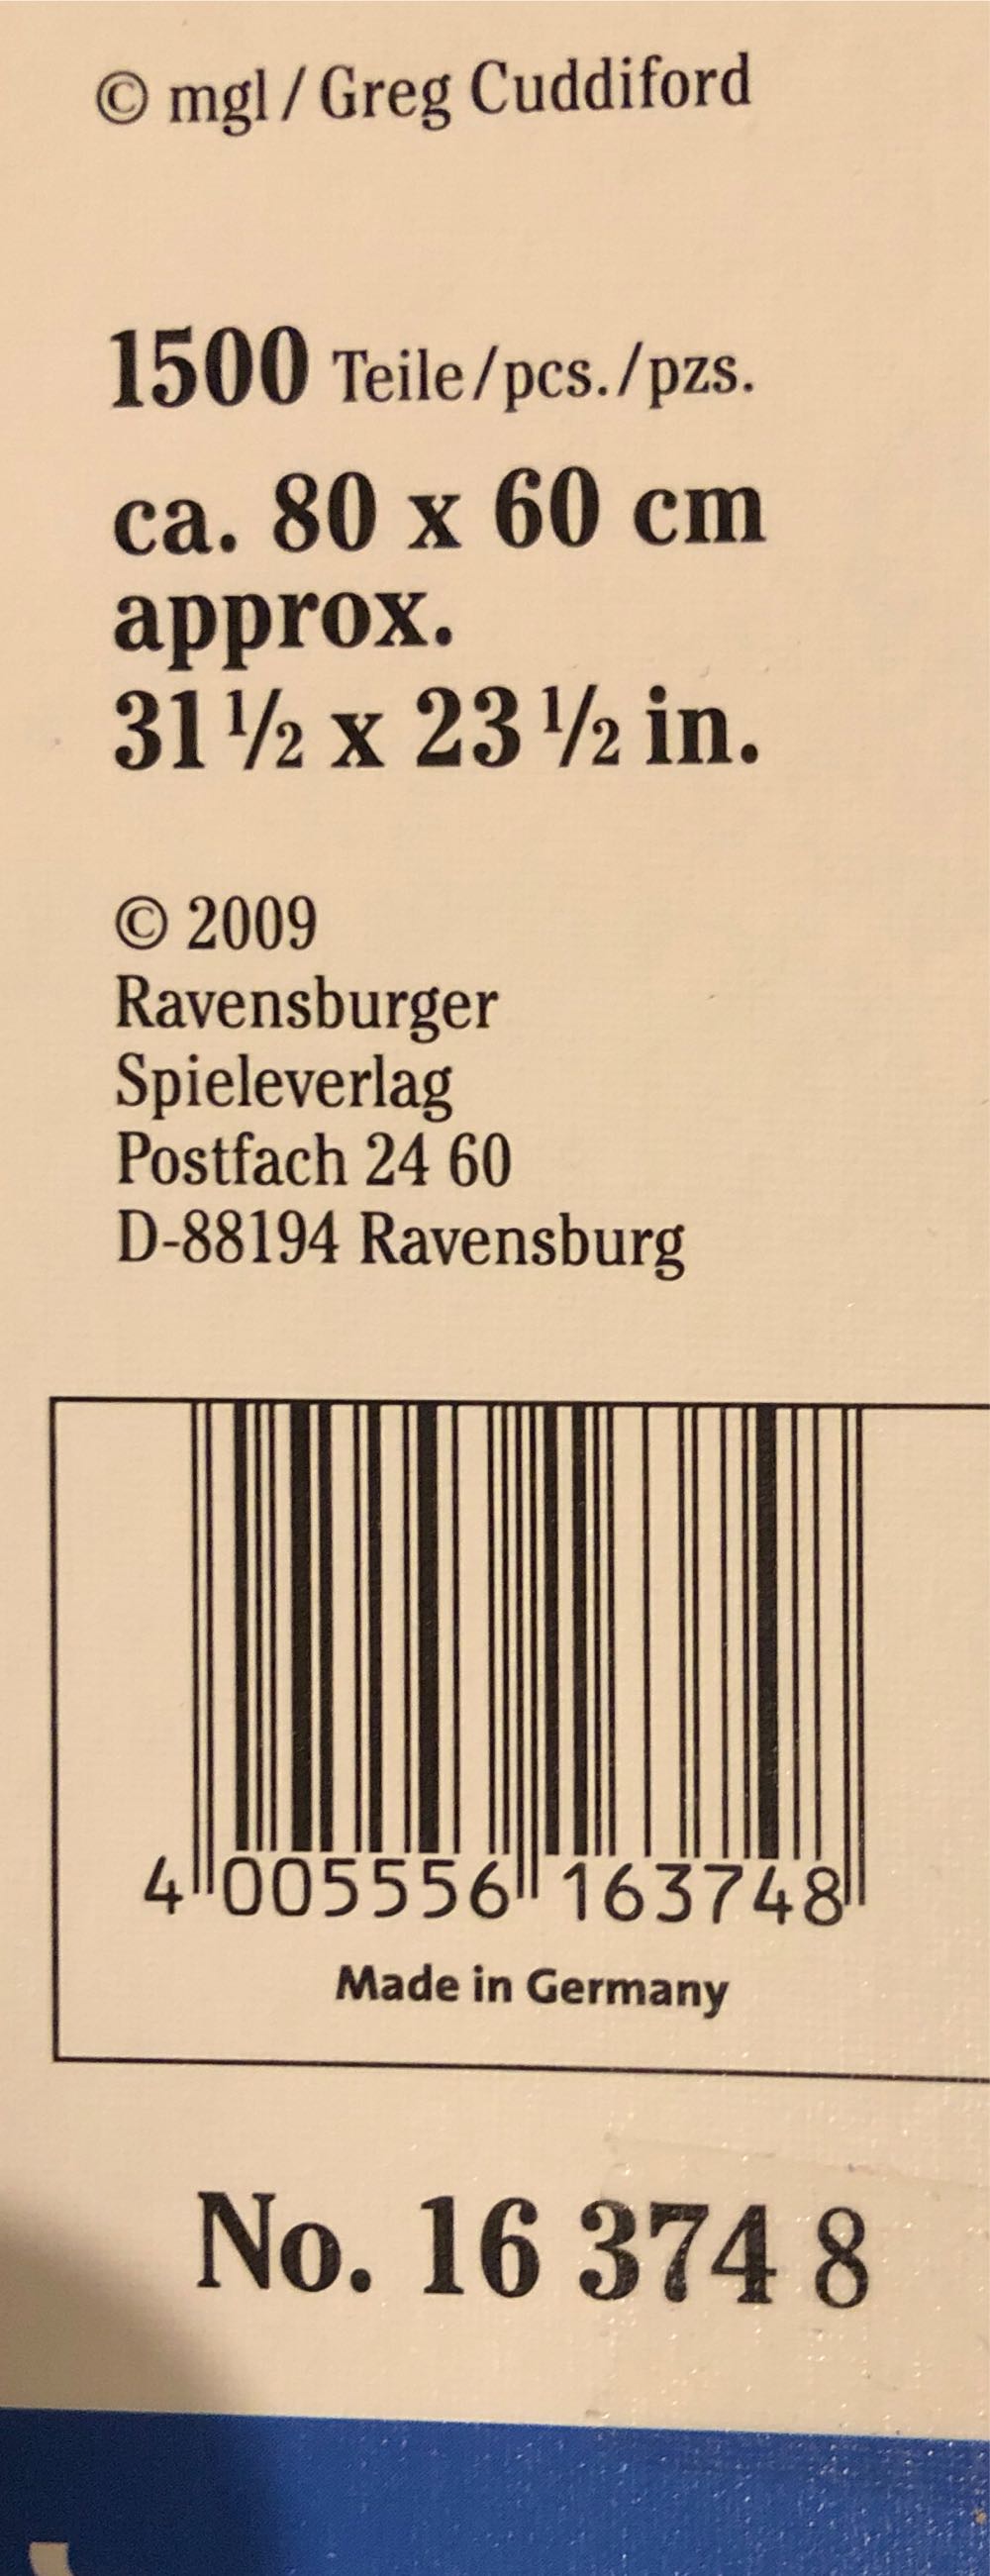 Puppies✅🐝 - Ravensburger puzzle collectible [Barcode 4005556163748] - Main Image 2